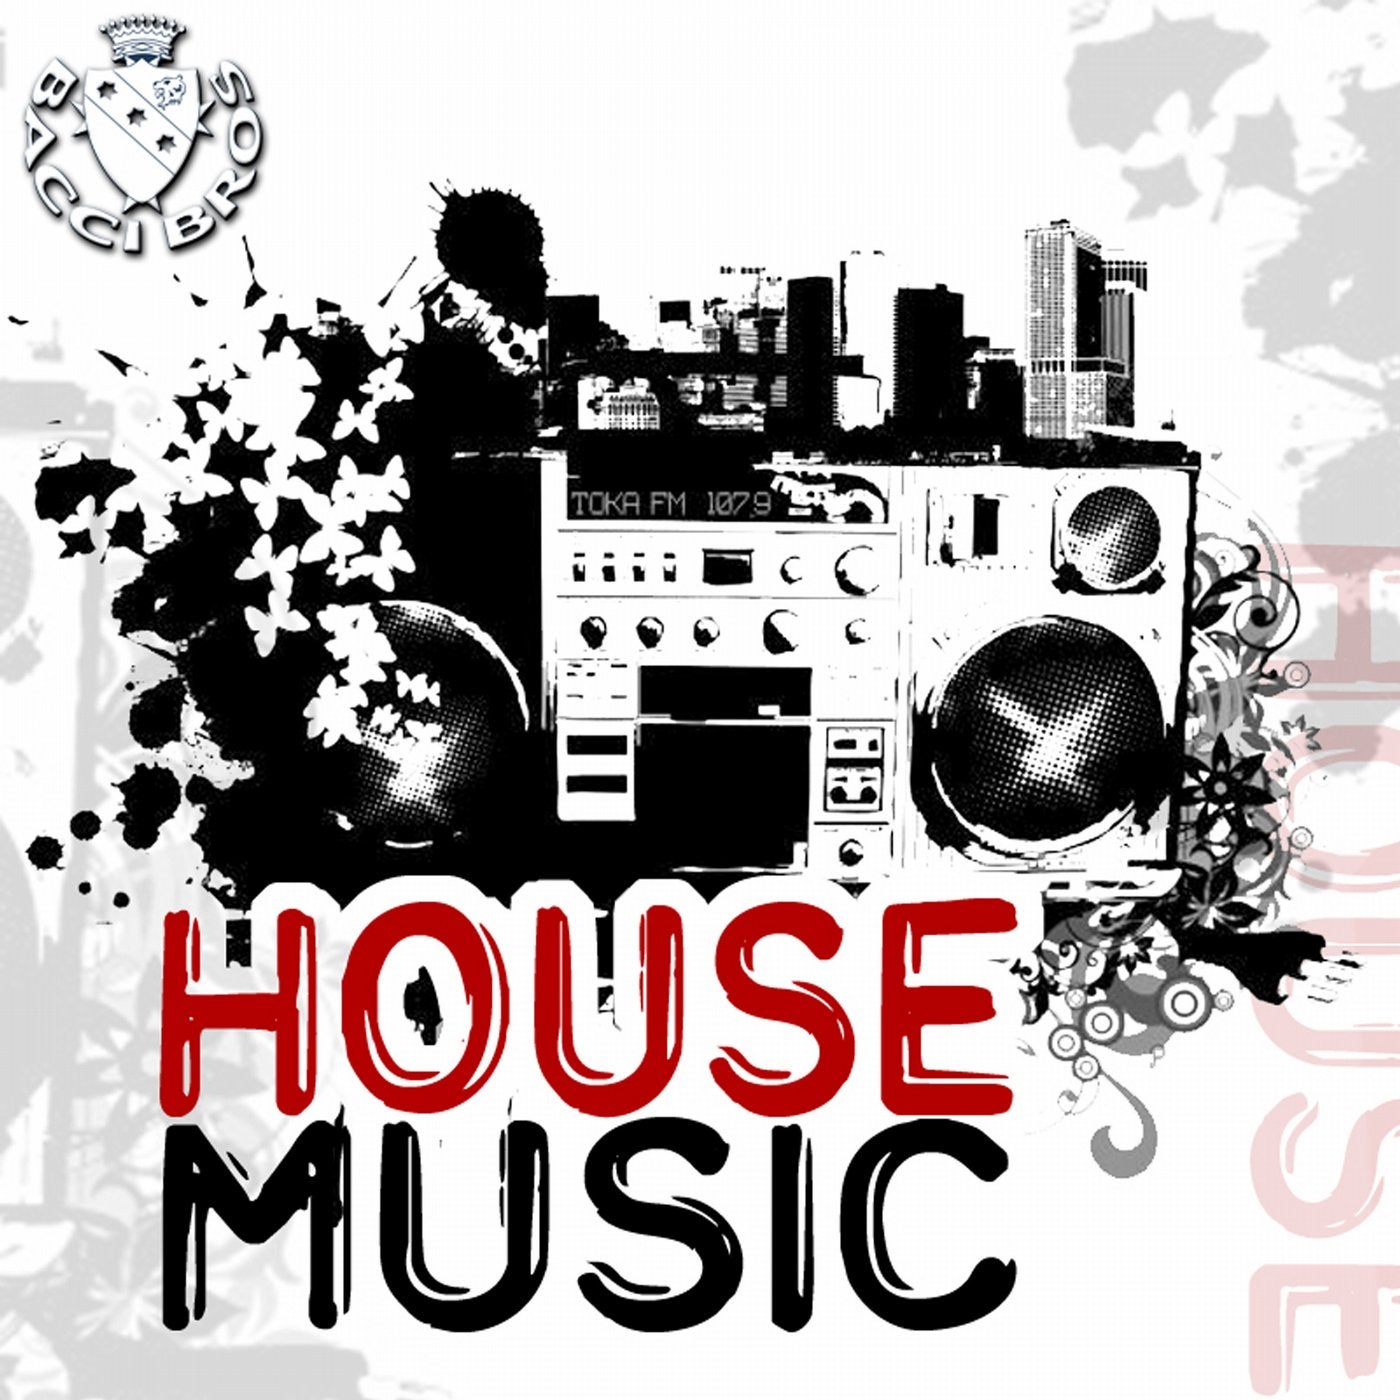 Саундтрек хаус. Музыкальный стиль House. House Music картинки. Хаус Жанр. Музыкальный стиль Хаус в рисунках.